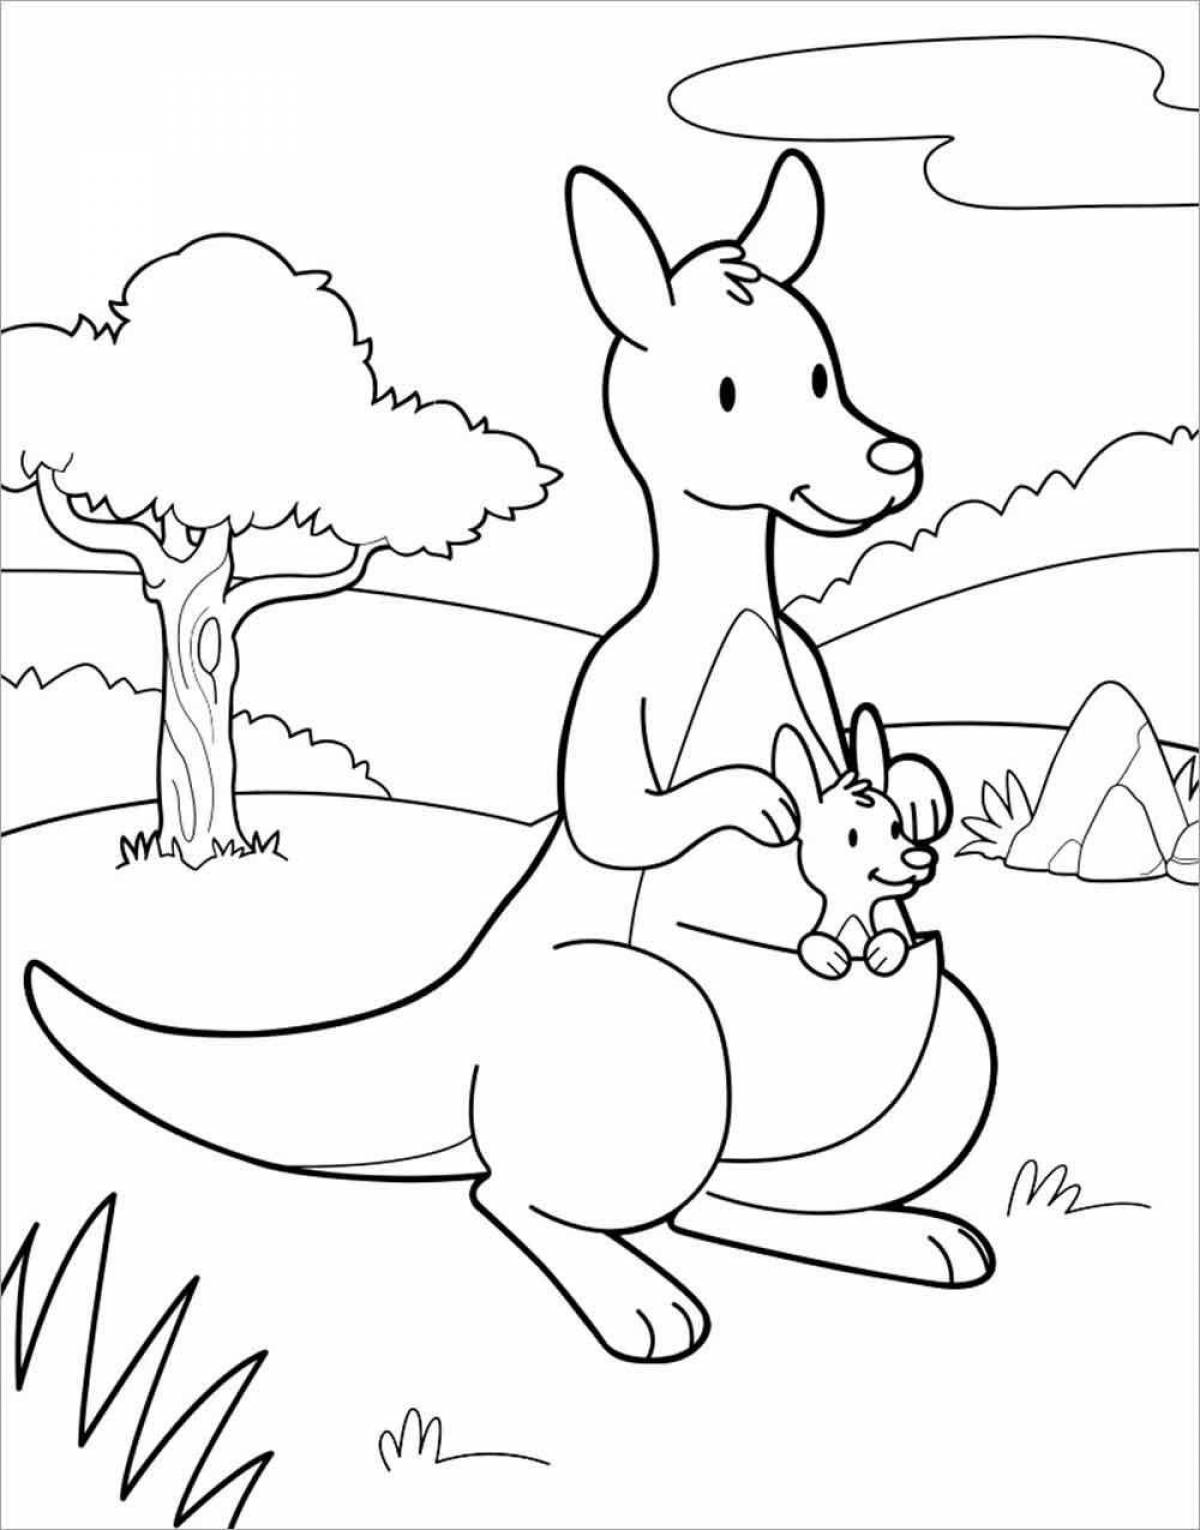 A fun kangaroo coloring book for kids